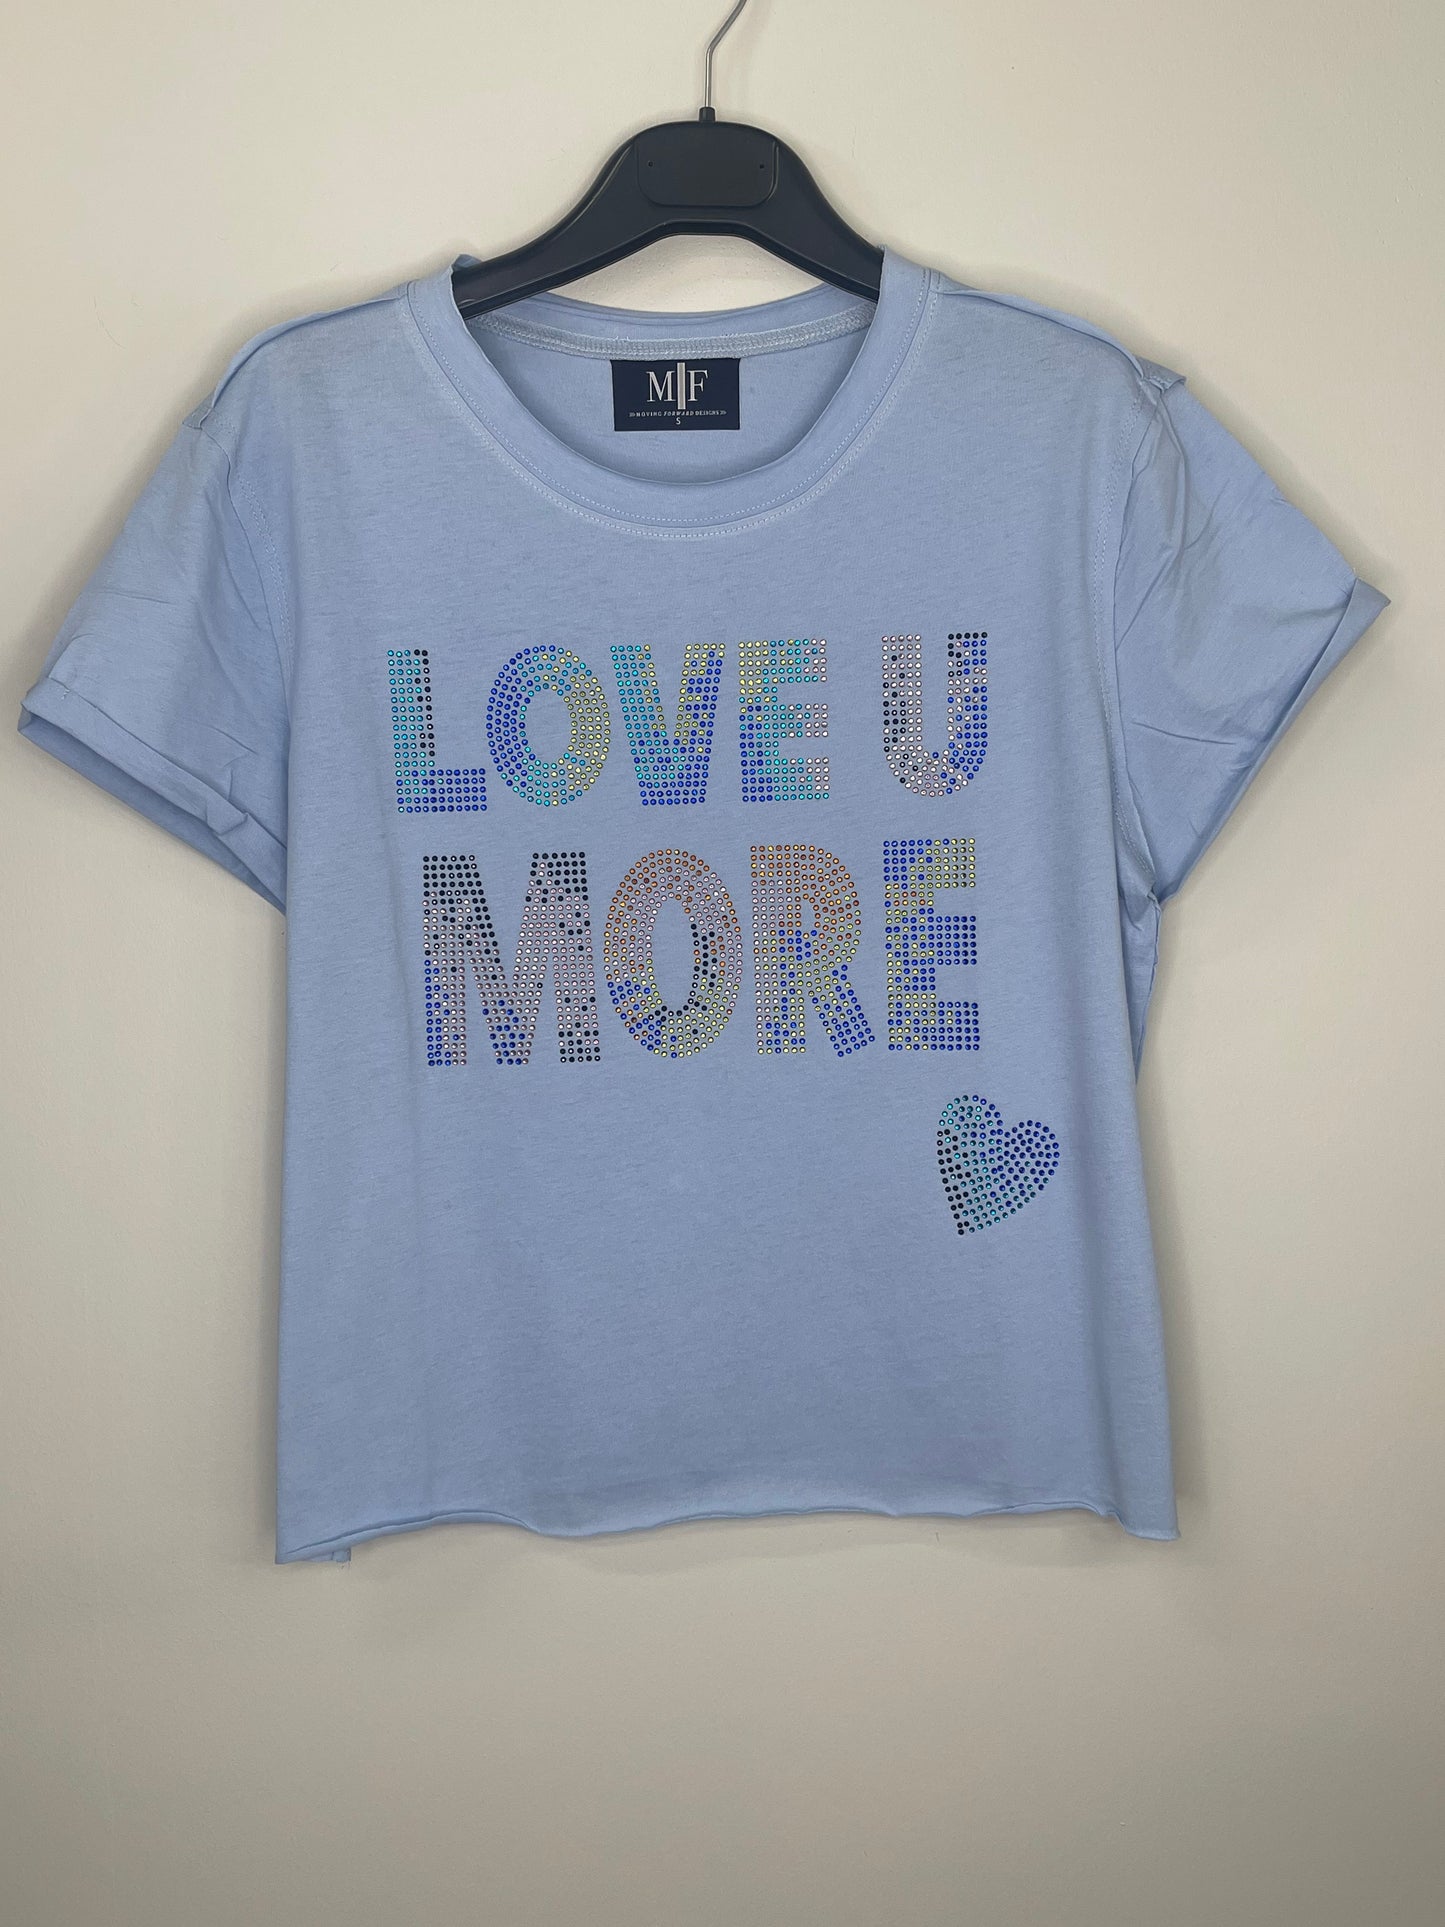 T-Shirt, Raw Edge Blue, Love U More